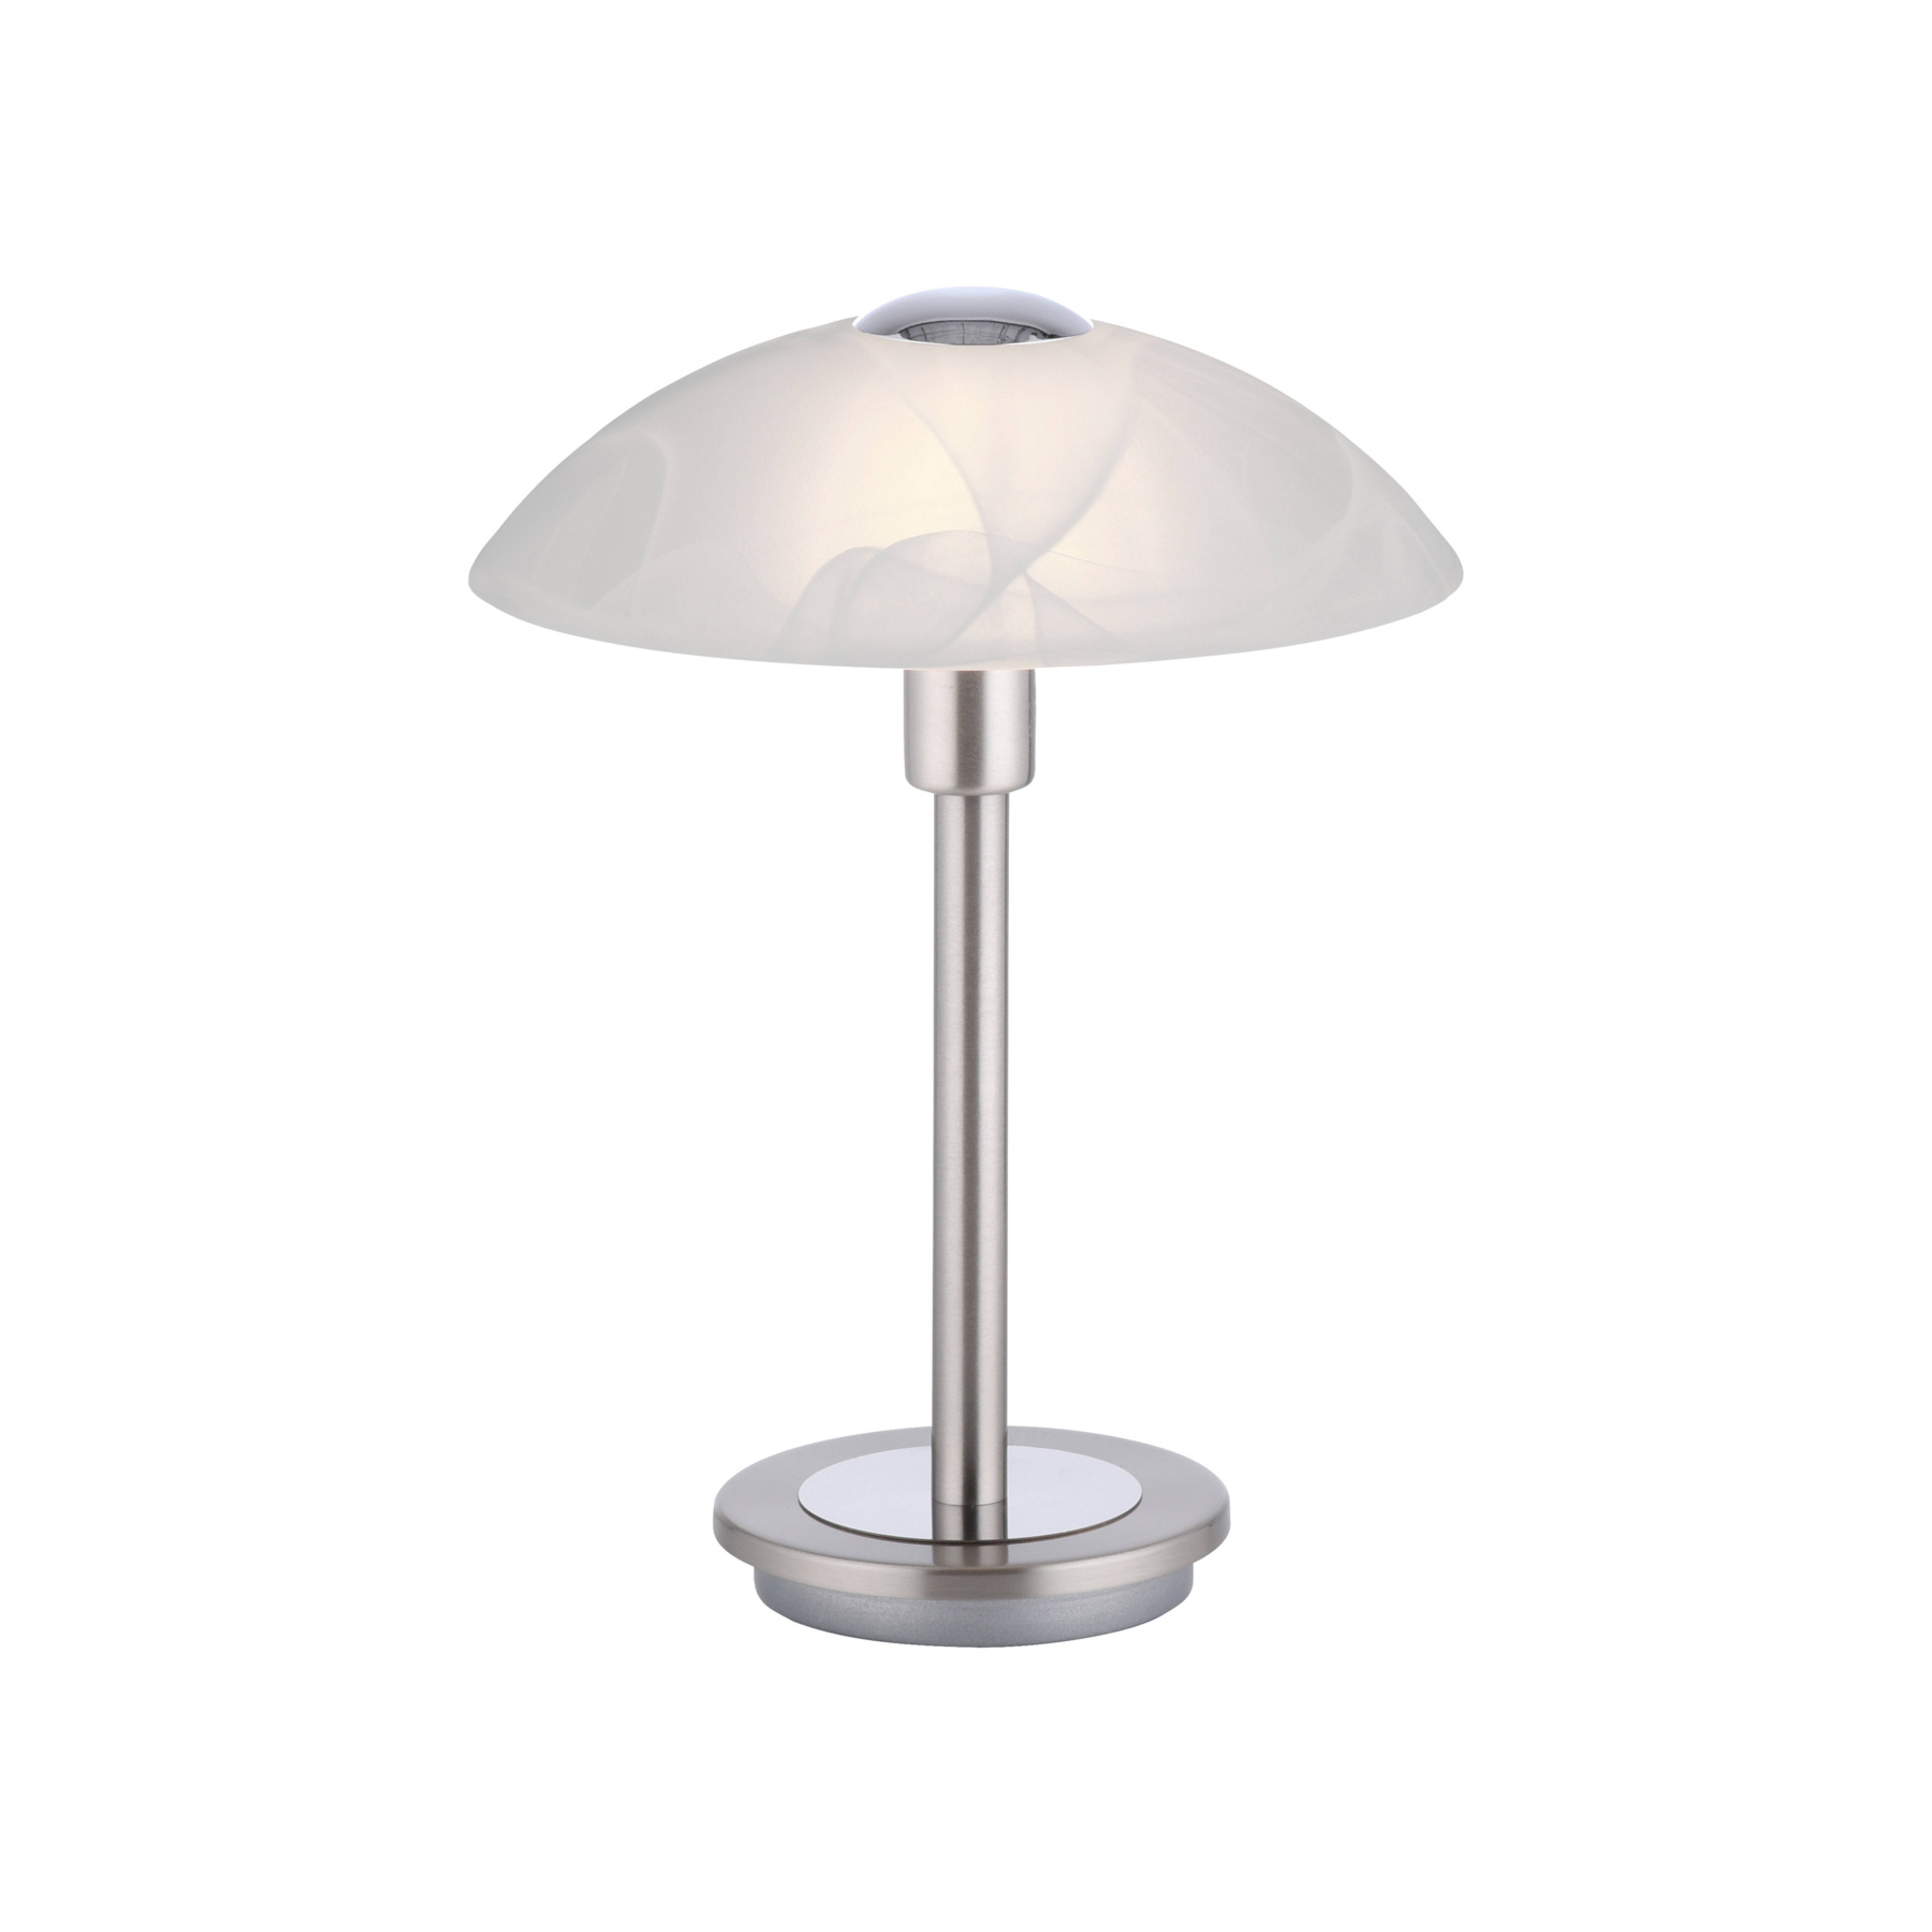 Paul Neuhaus Enova lampada da tavolo color acciaio